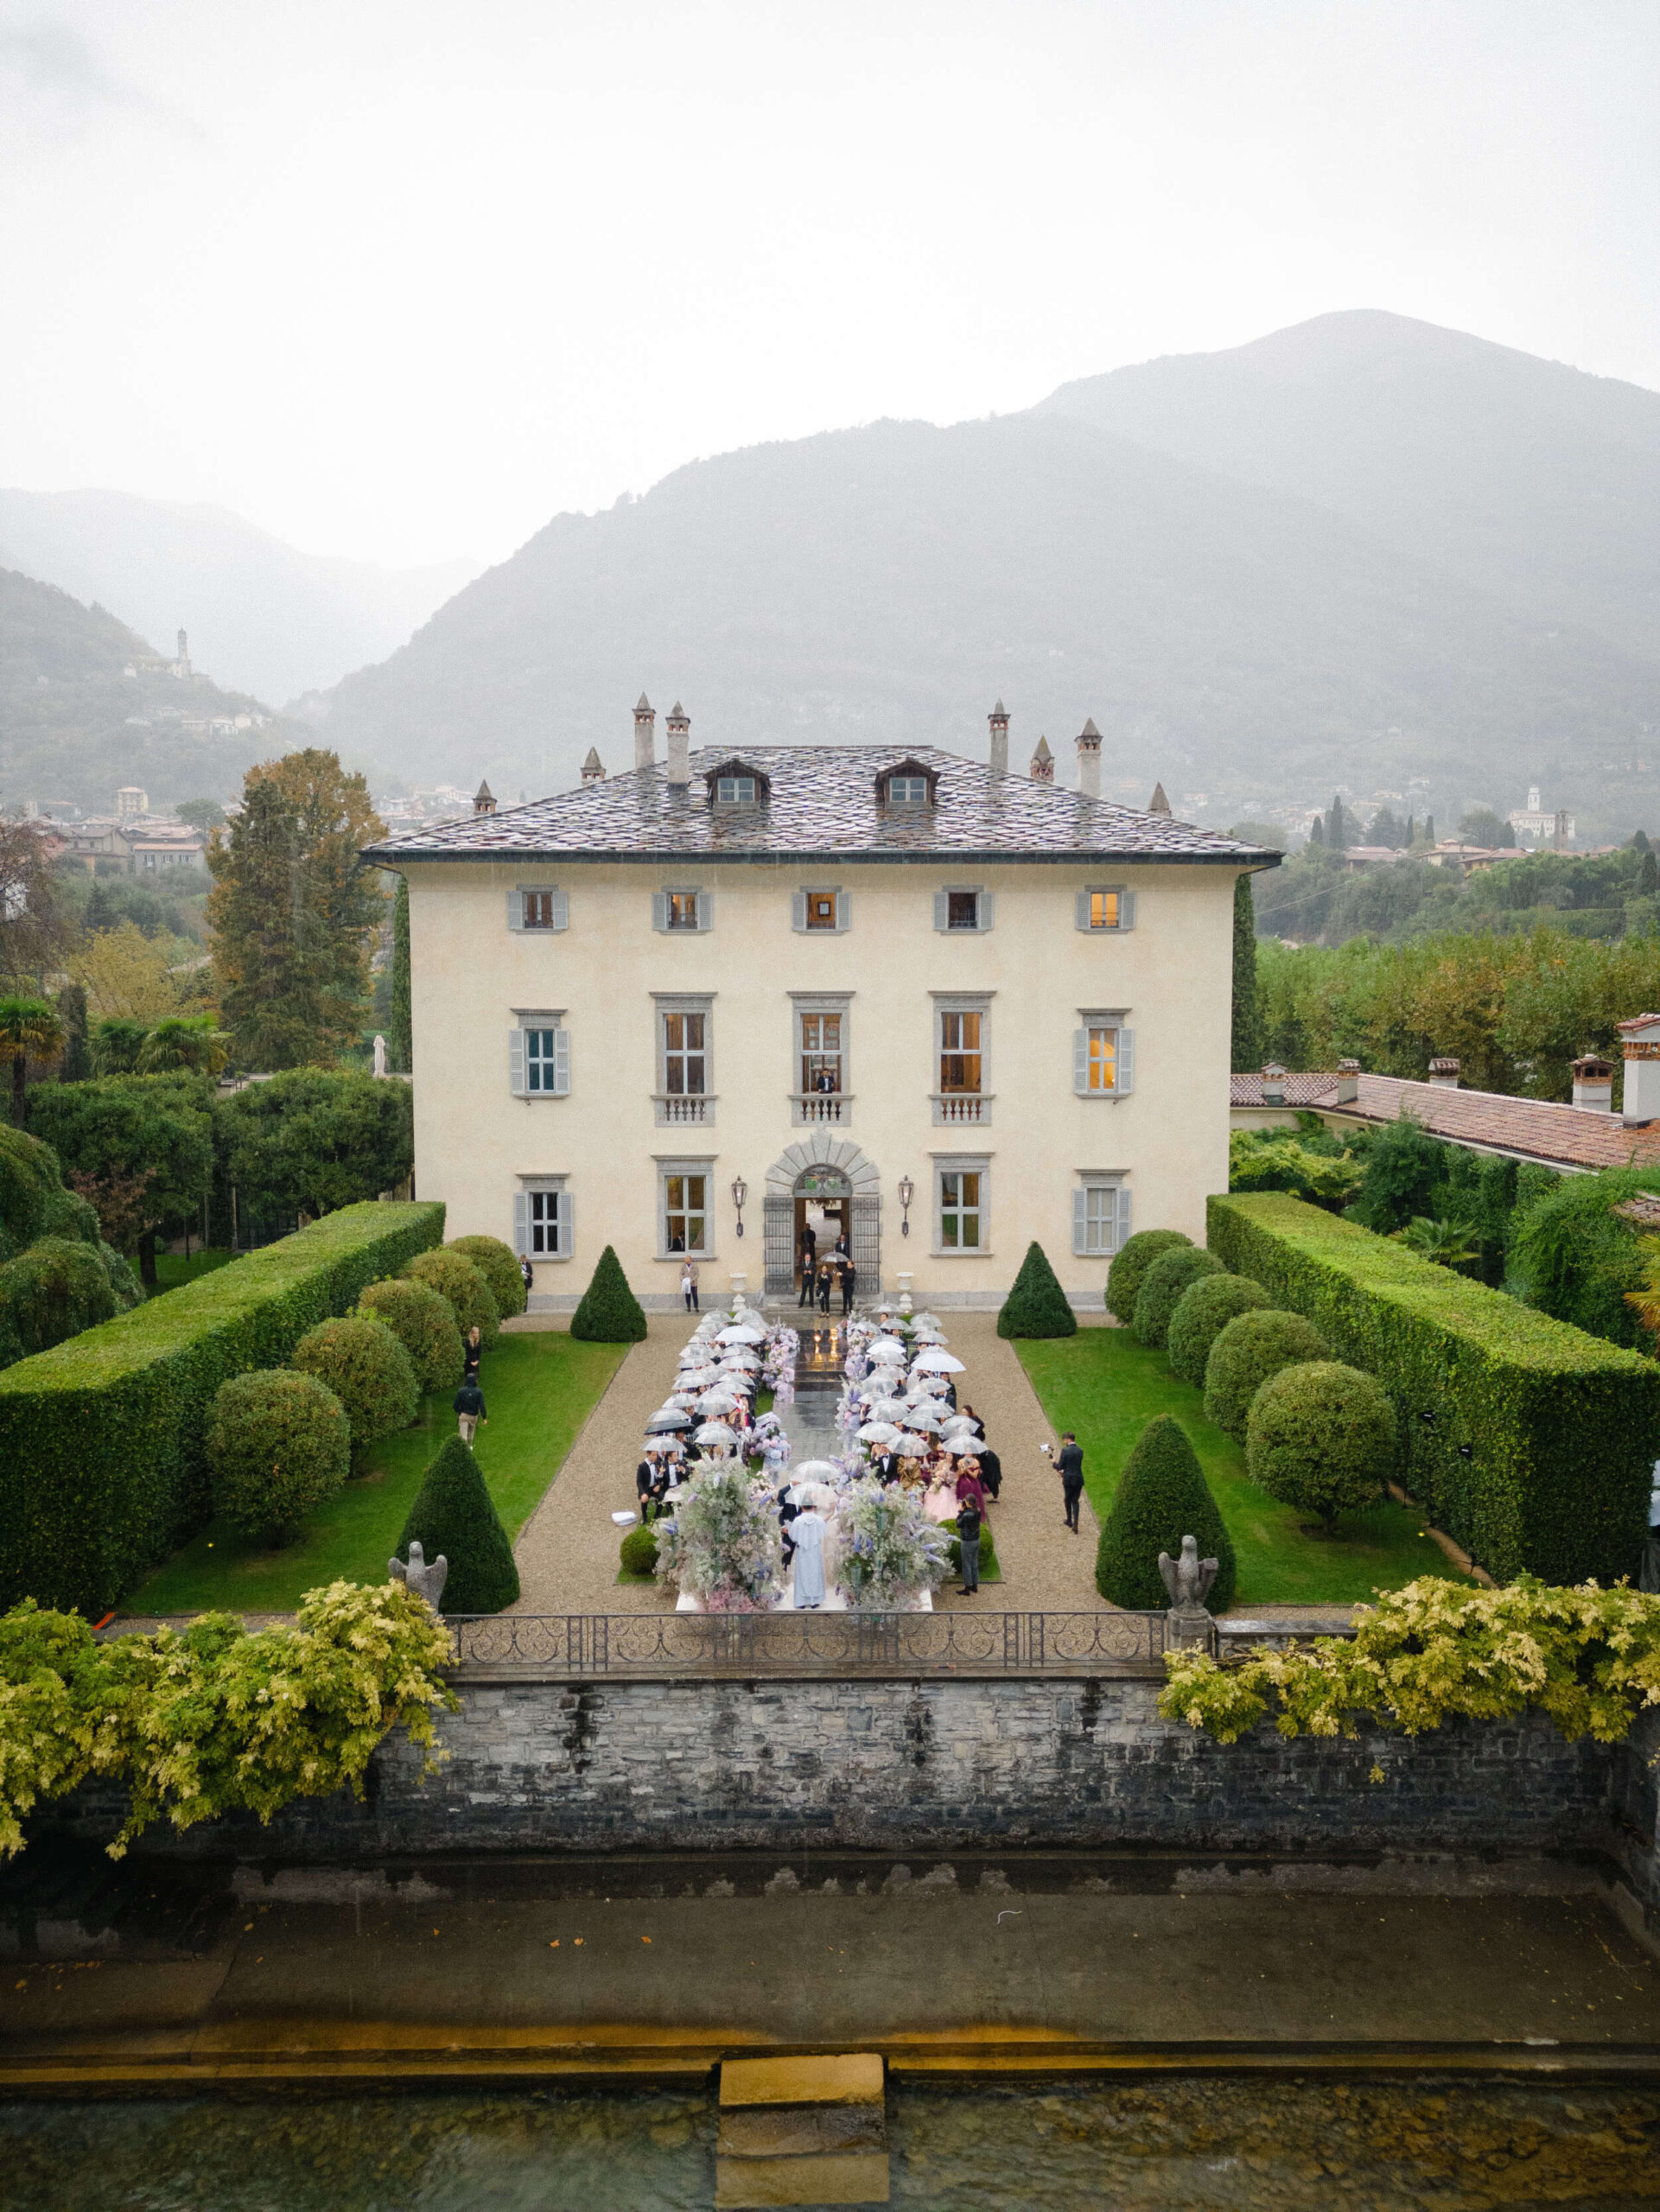 The historical Villa Balbiano overlooking Lake Como